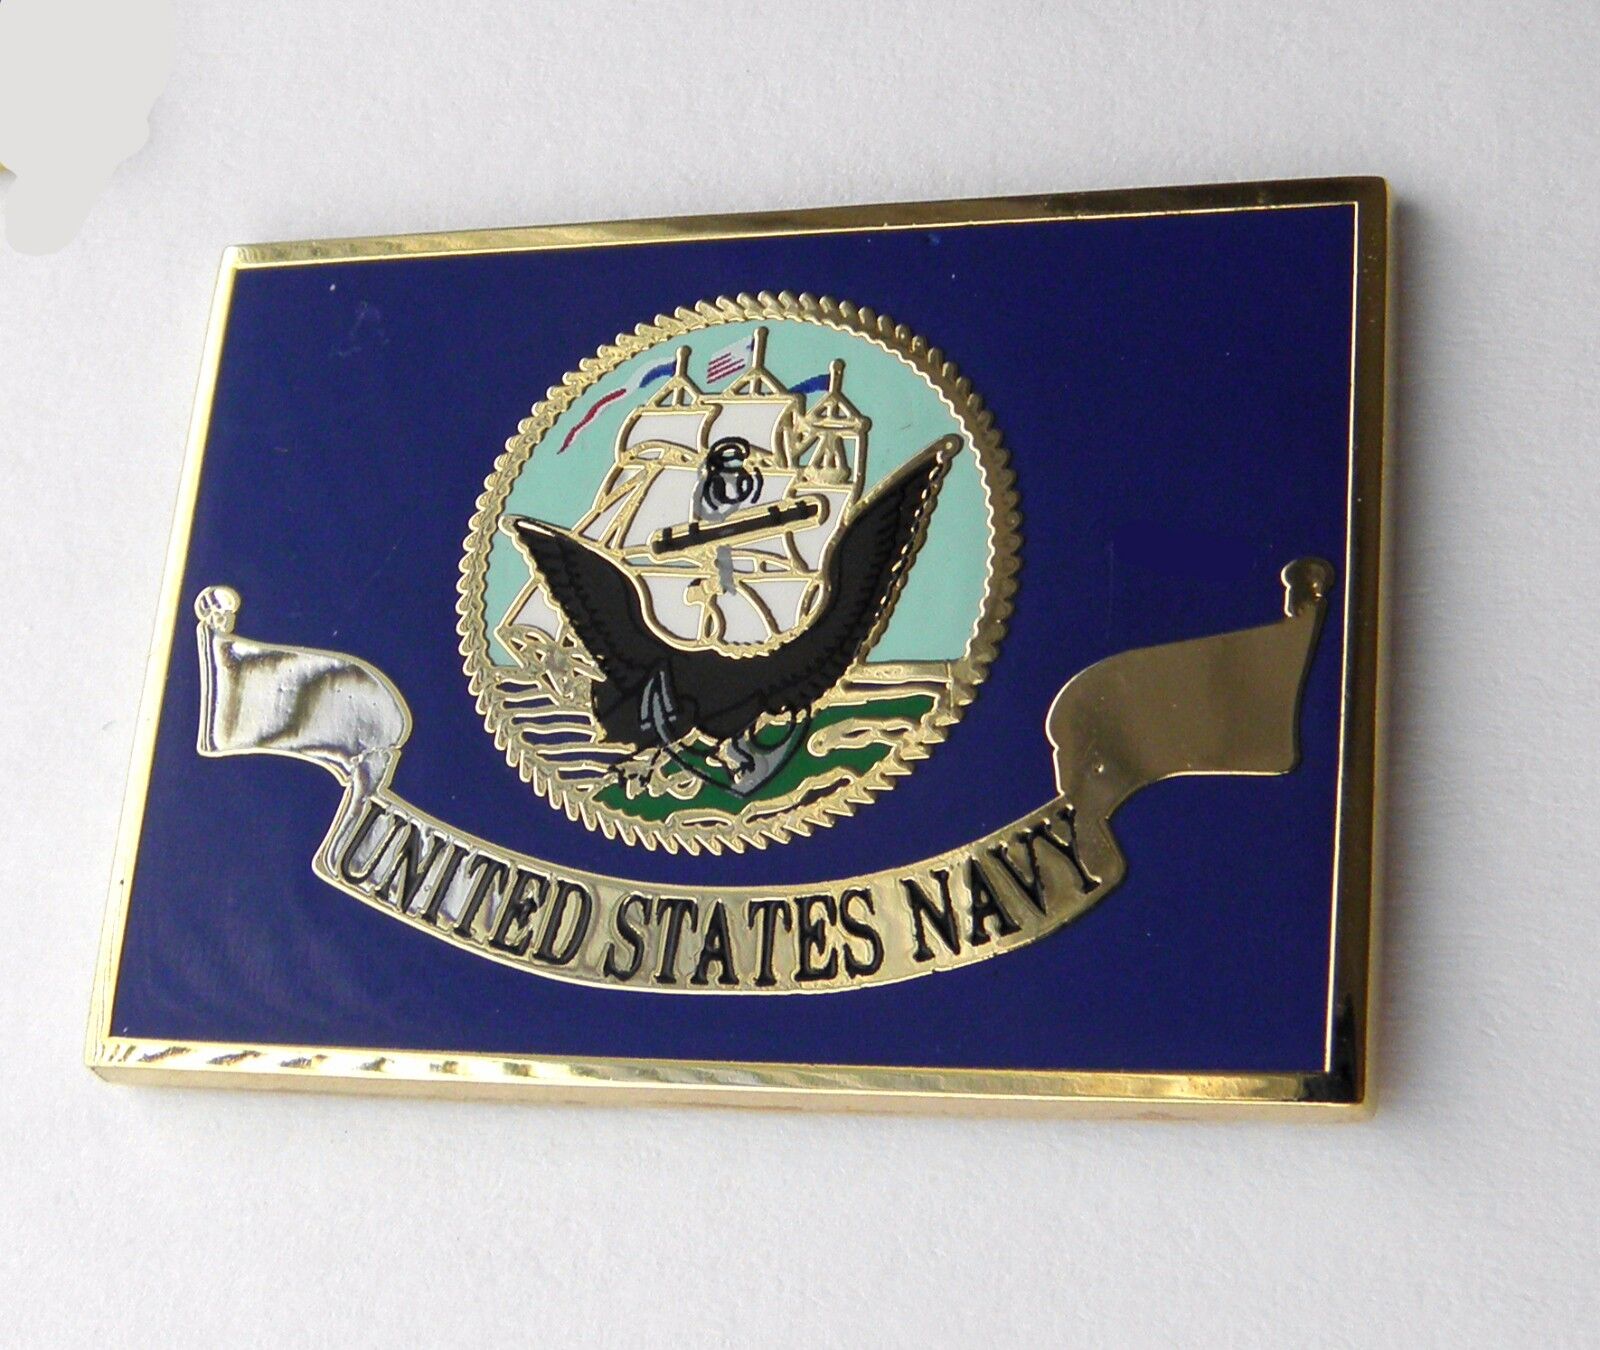 USN UNITED STATES US NAVY LARGE FLAG LAPEL PIN BADGE 1.5 INCHES